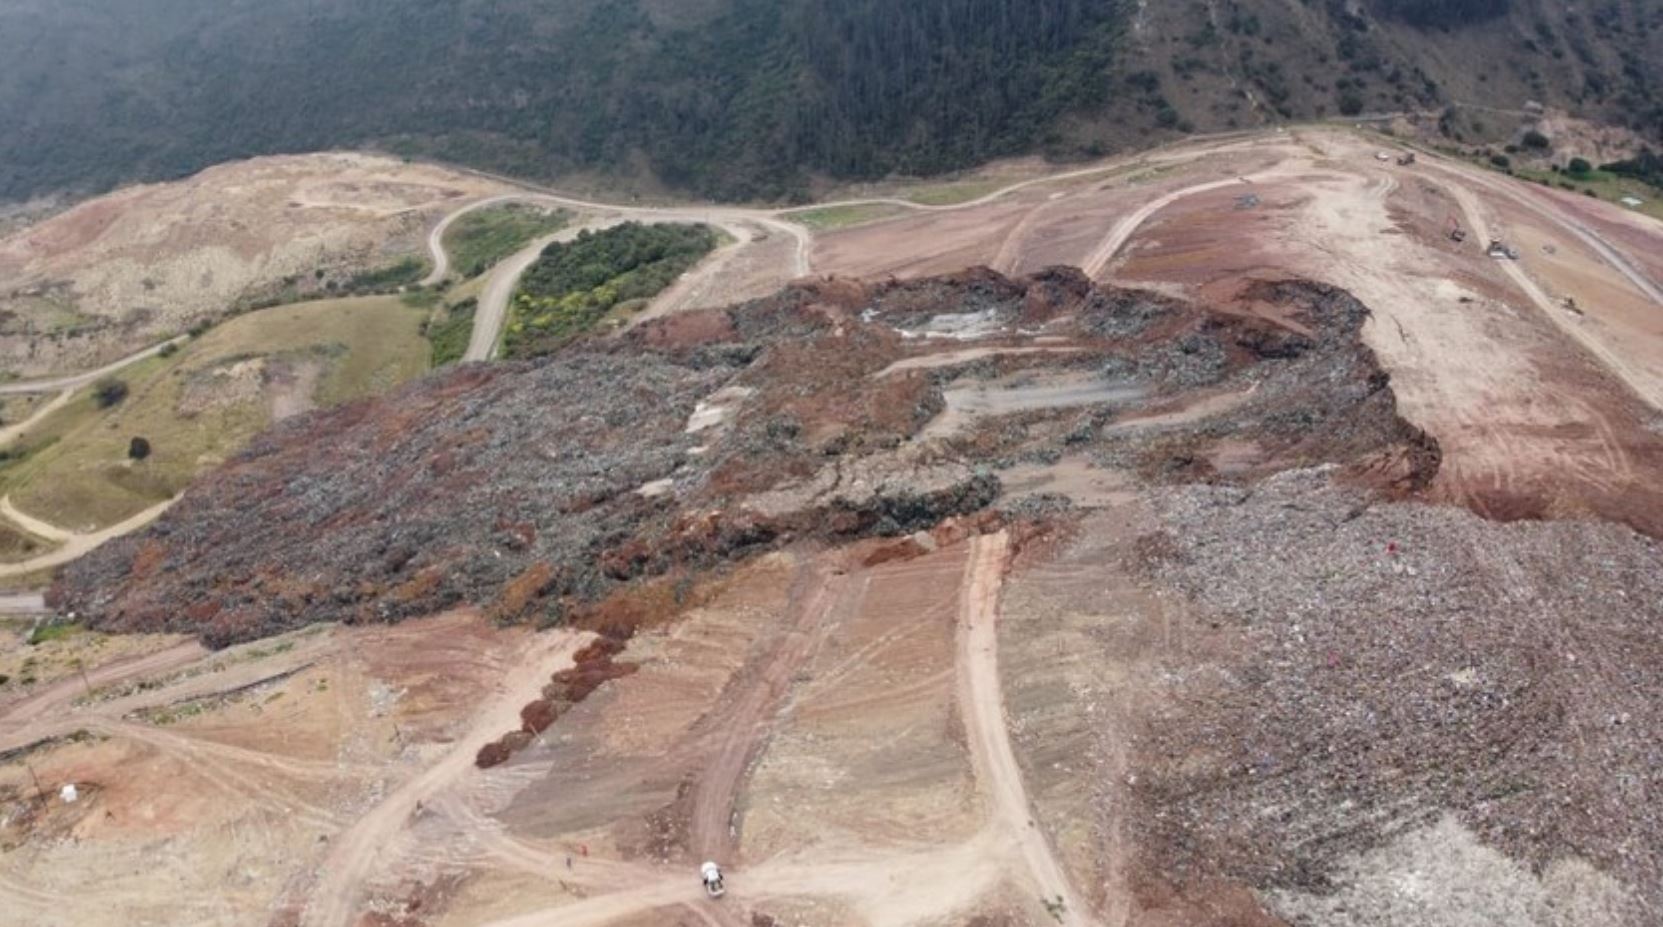 The Dona Juana garbage landslide